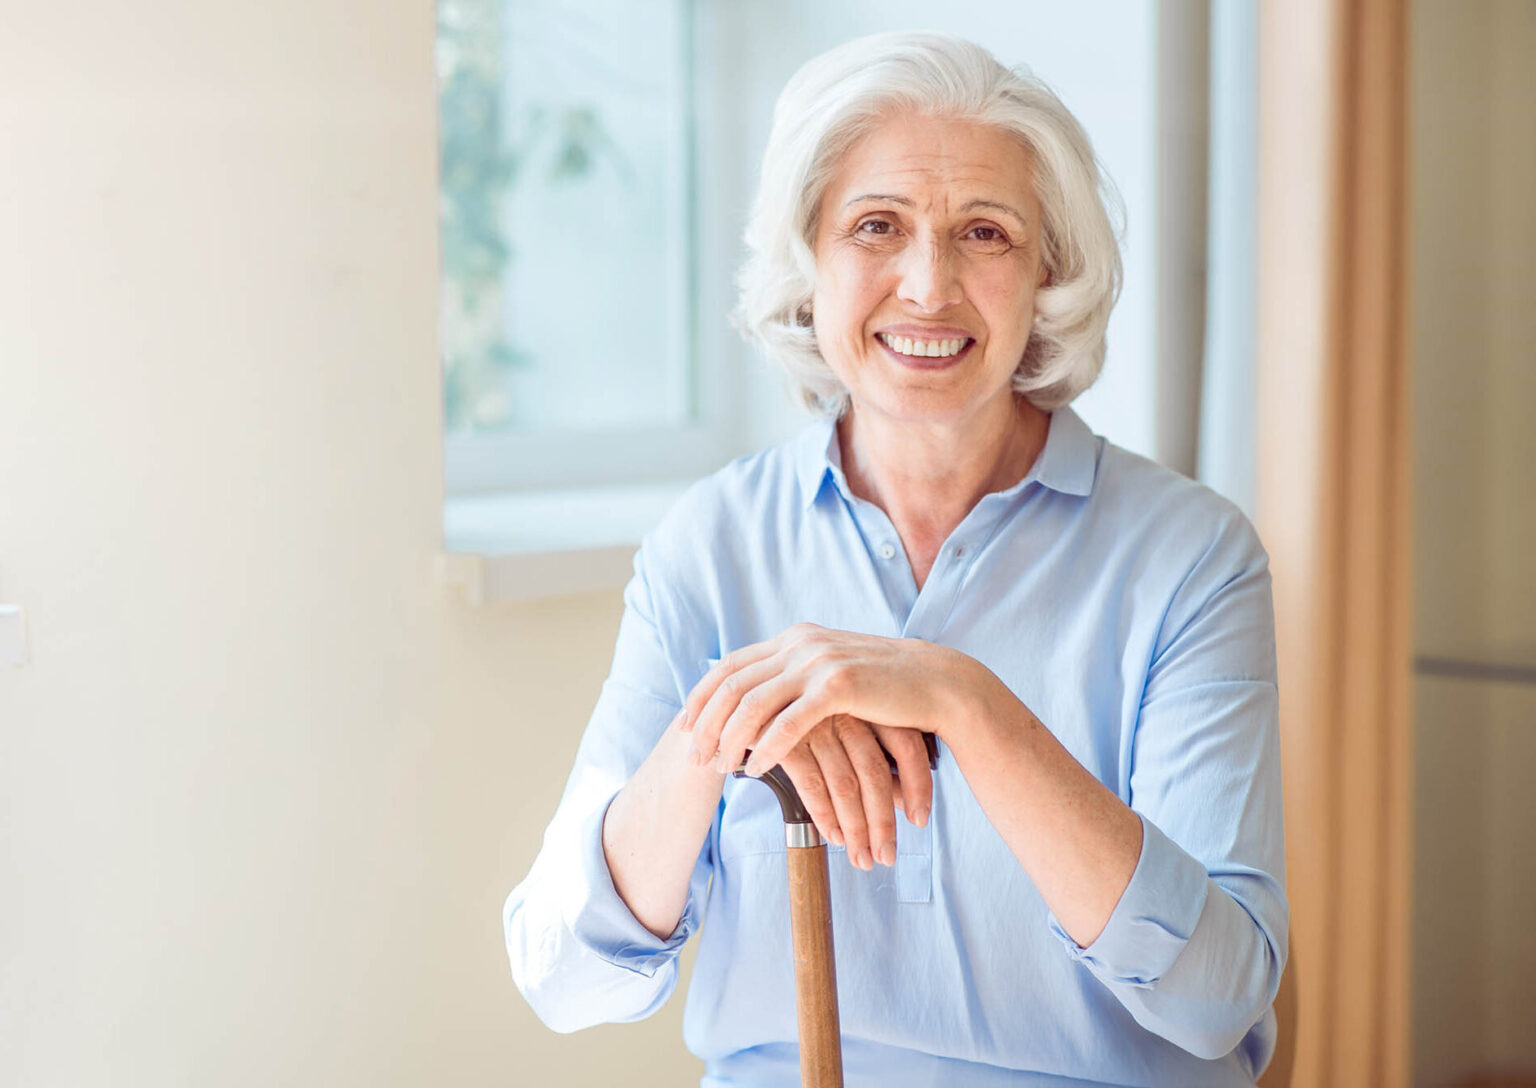 Smiling older woman holding cane